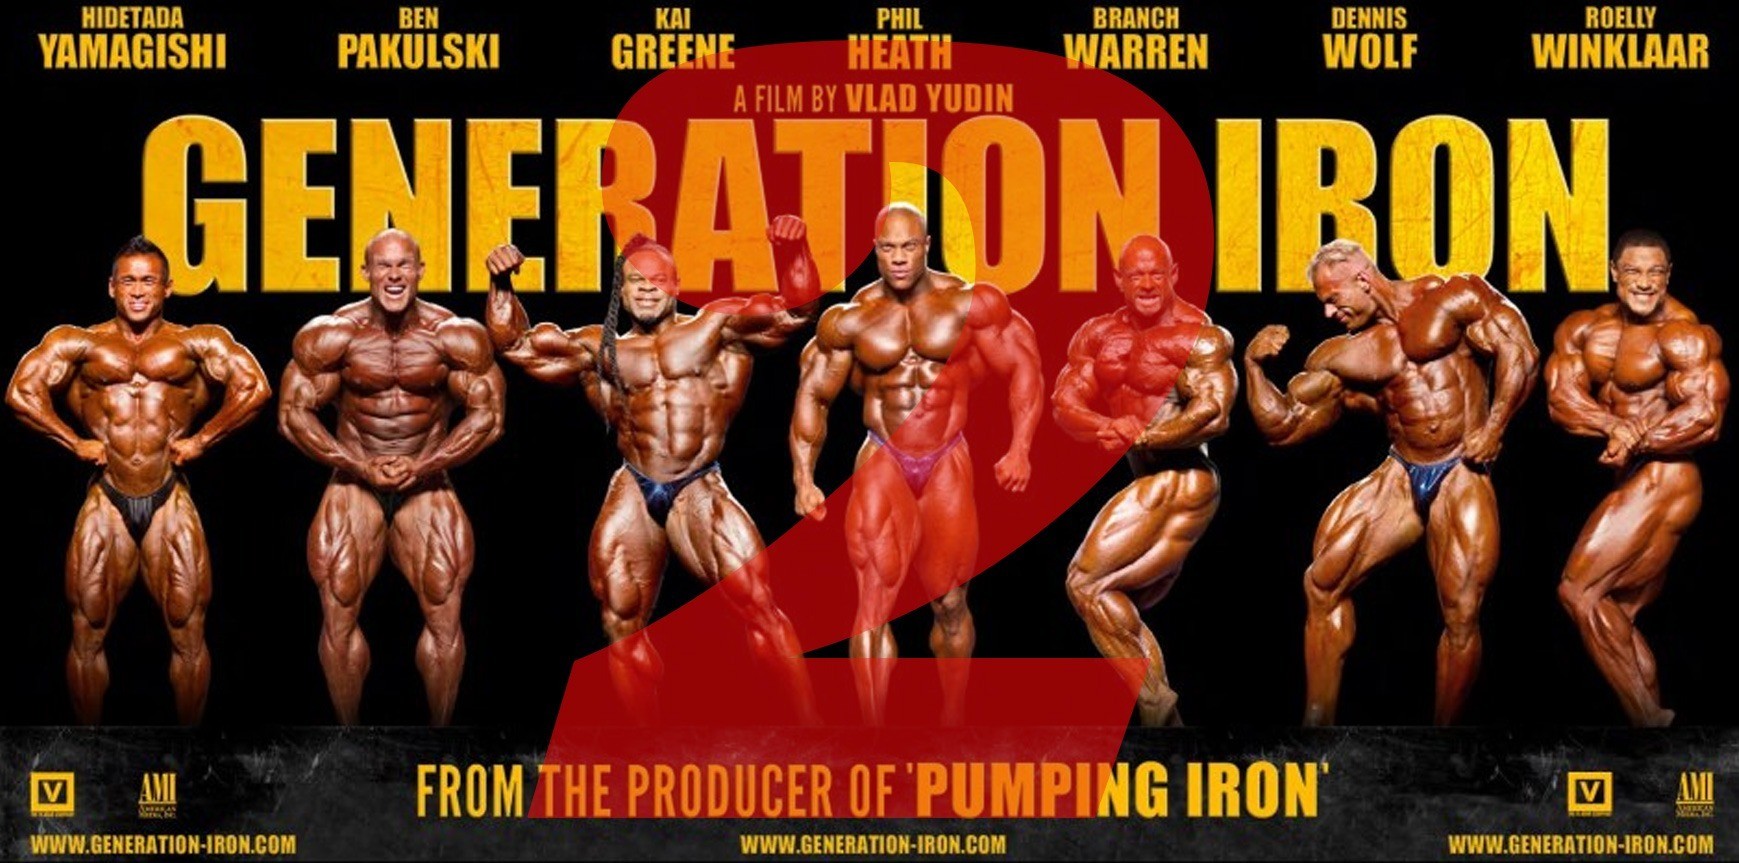 omdrejningspunkt Joke teater It's Official: Generation Iron 2 Confirmed! – Fitness Volt